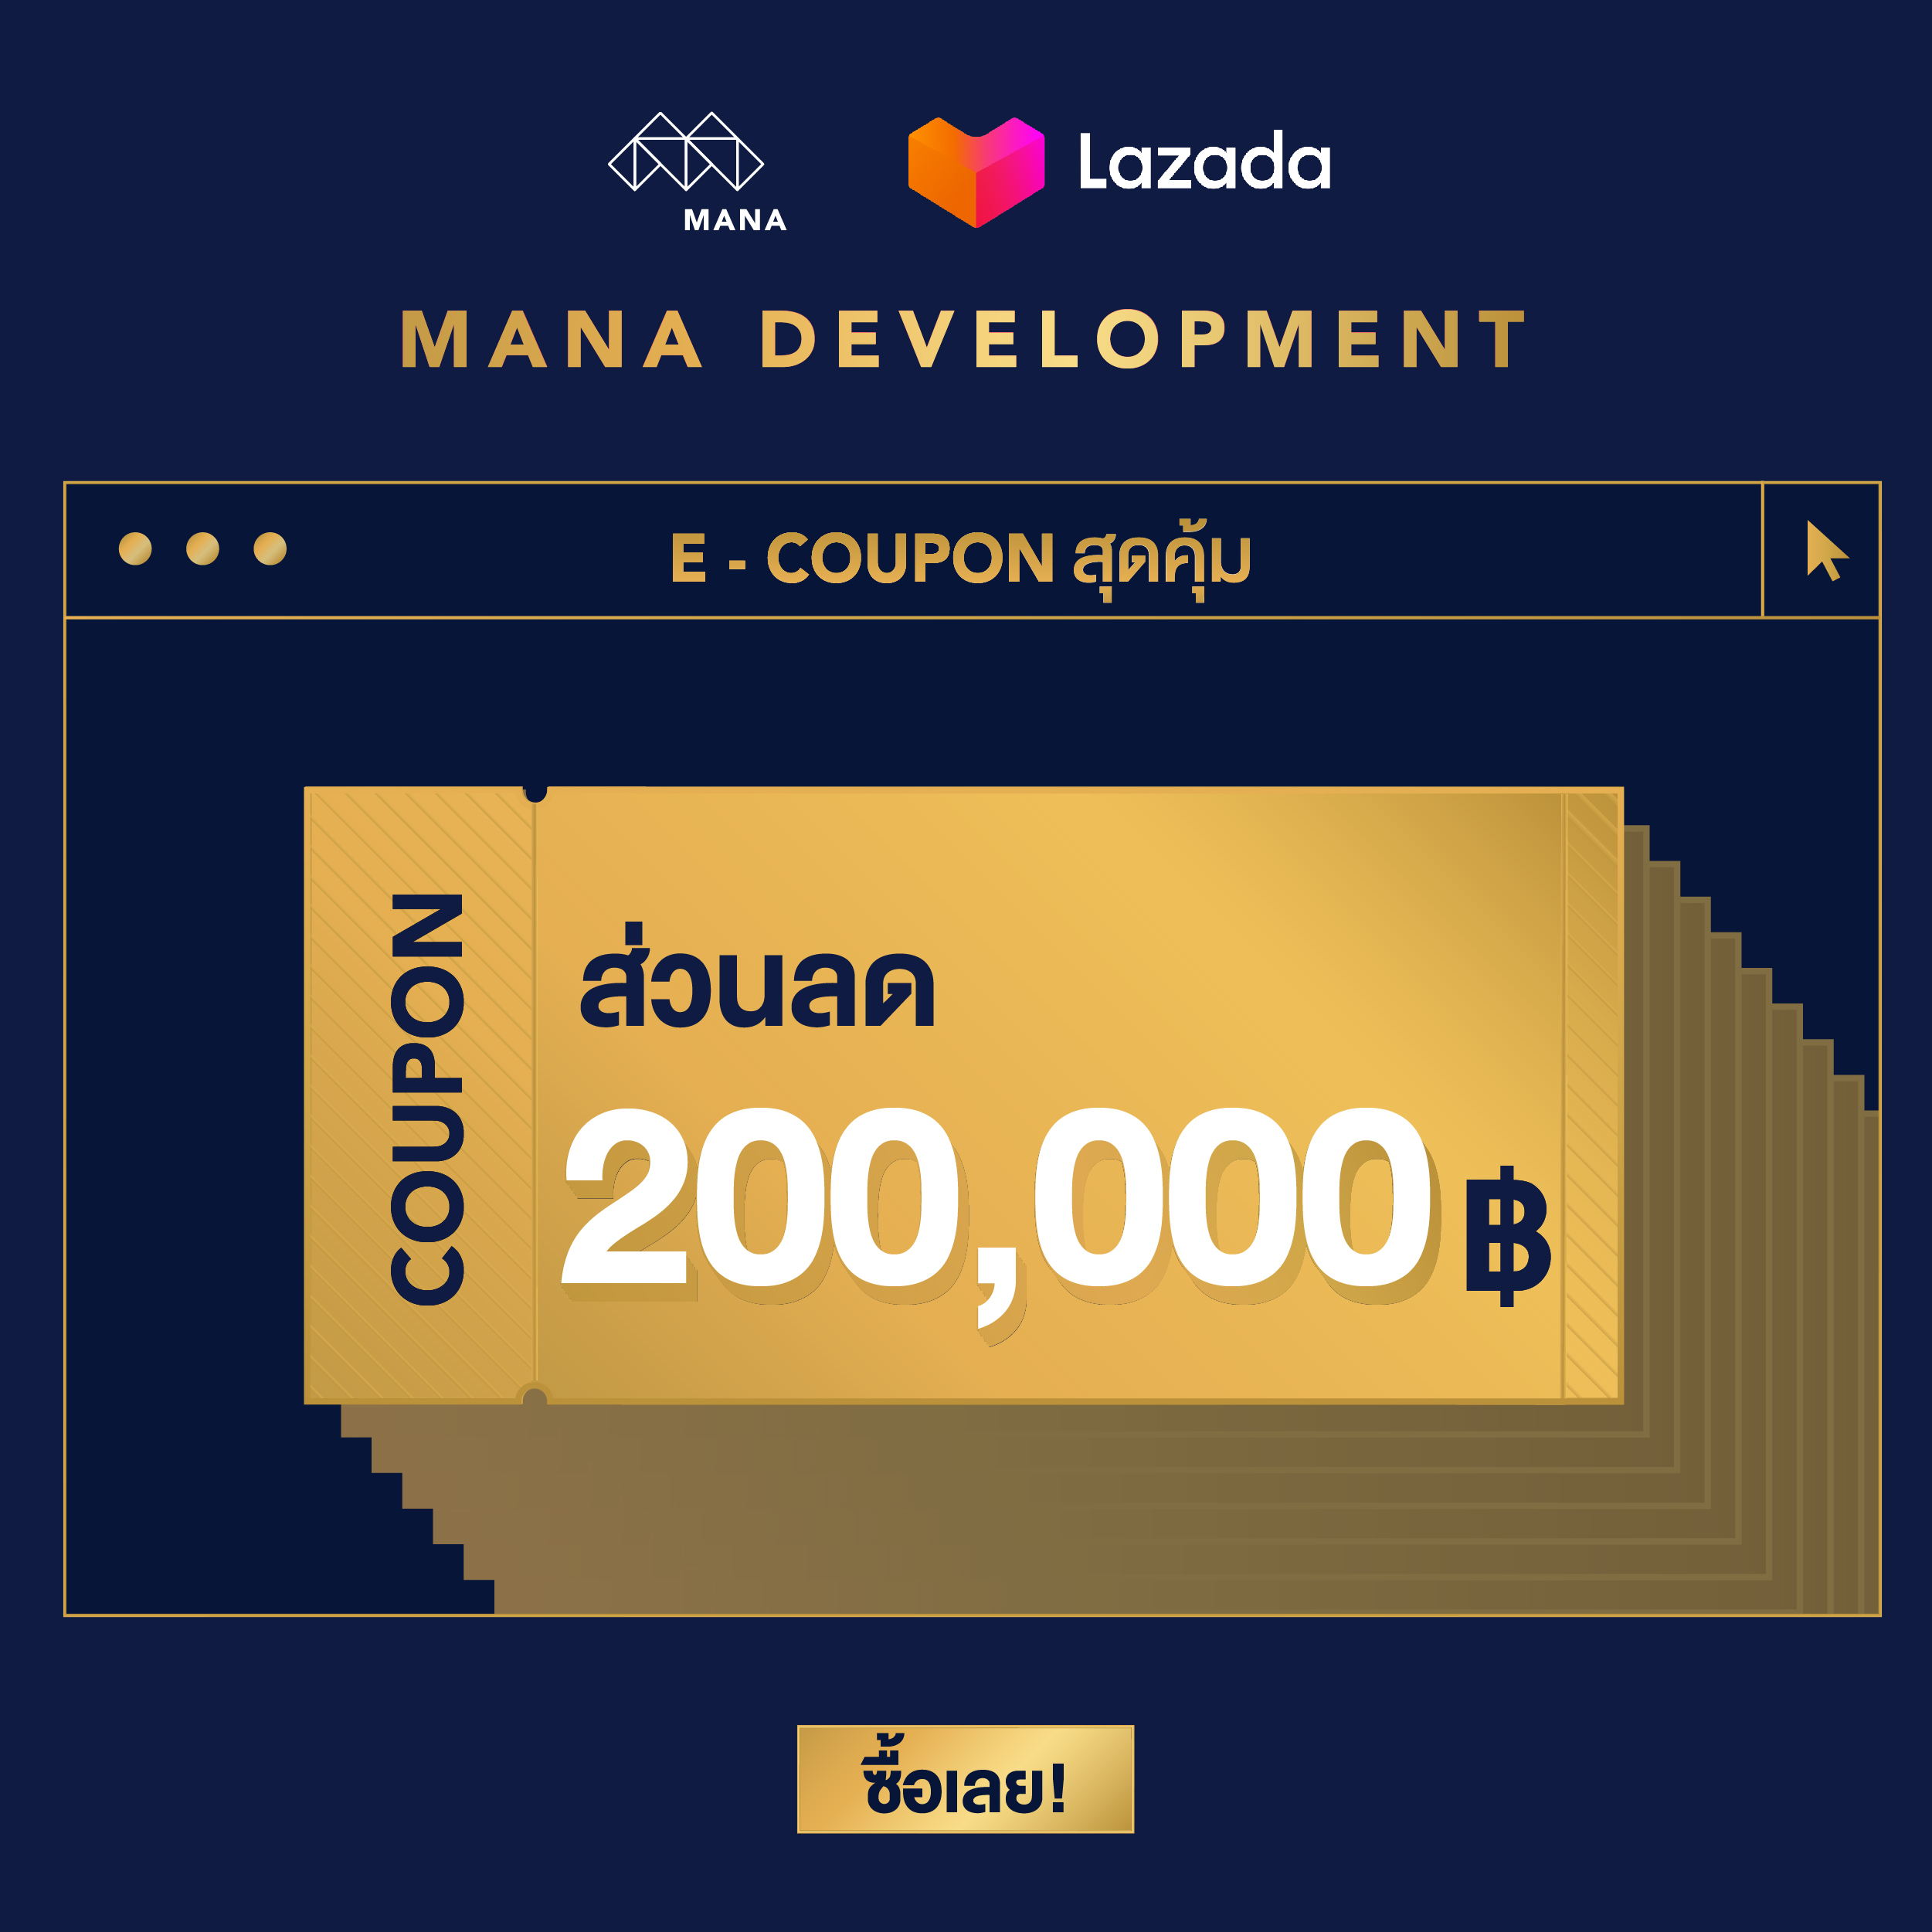 E-Voucher MANA Development - คูปองส่วนลดโครงการเอสเพน คอนโด ราคา 200 บาท ใช้เป็นส่วนลด 200,000 บาท [จัดส่งทาง Email]